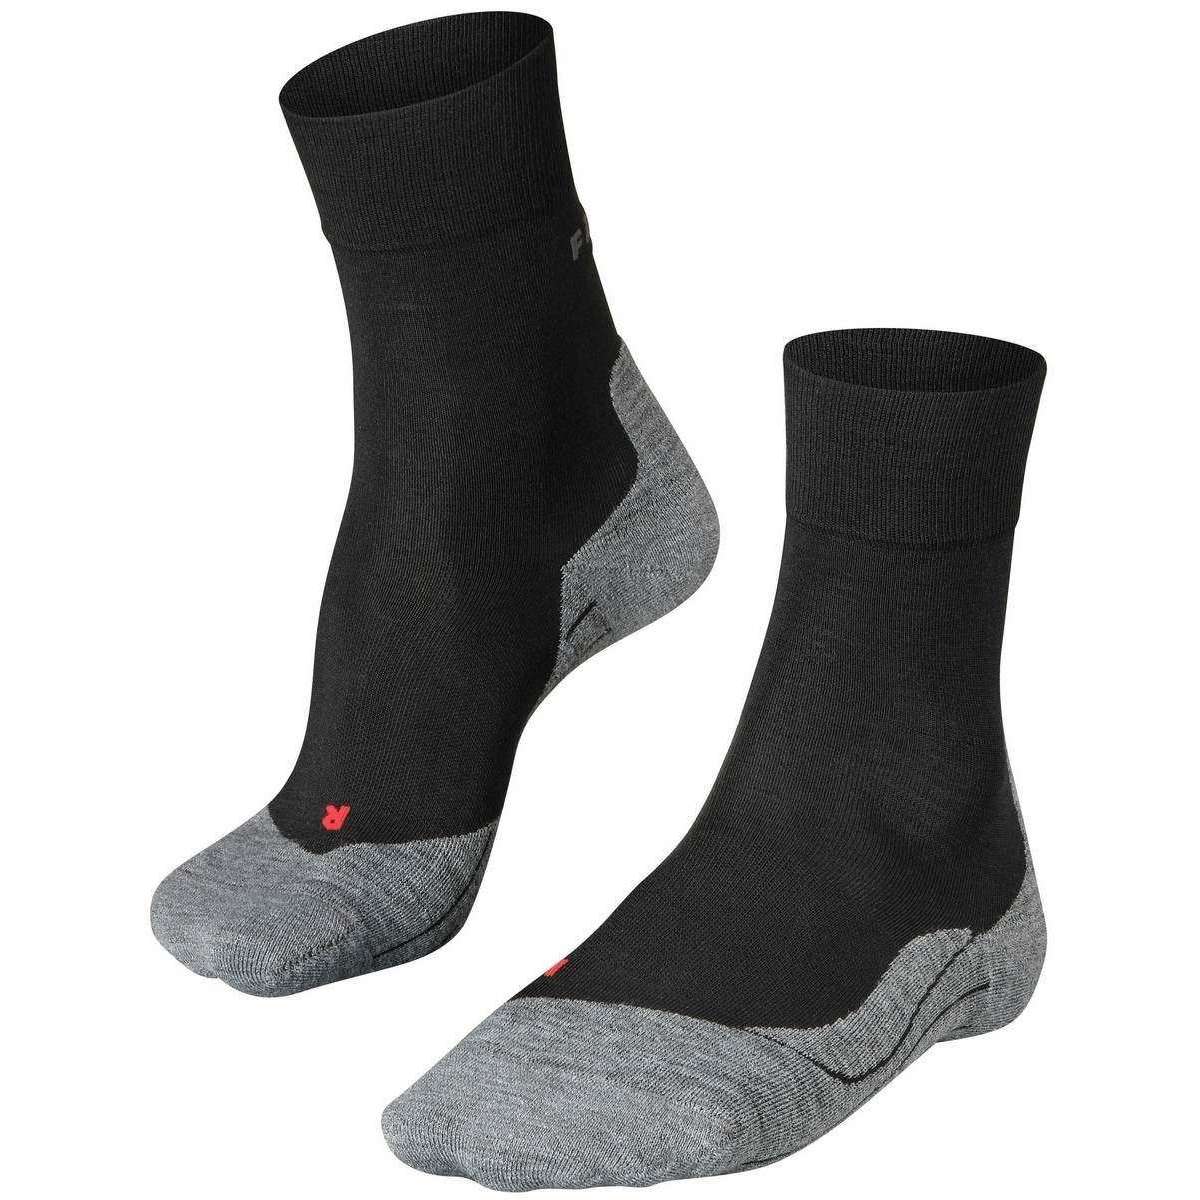 Falke Running 4 Wool Socks - Black/Grey